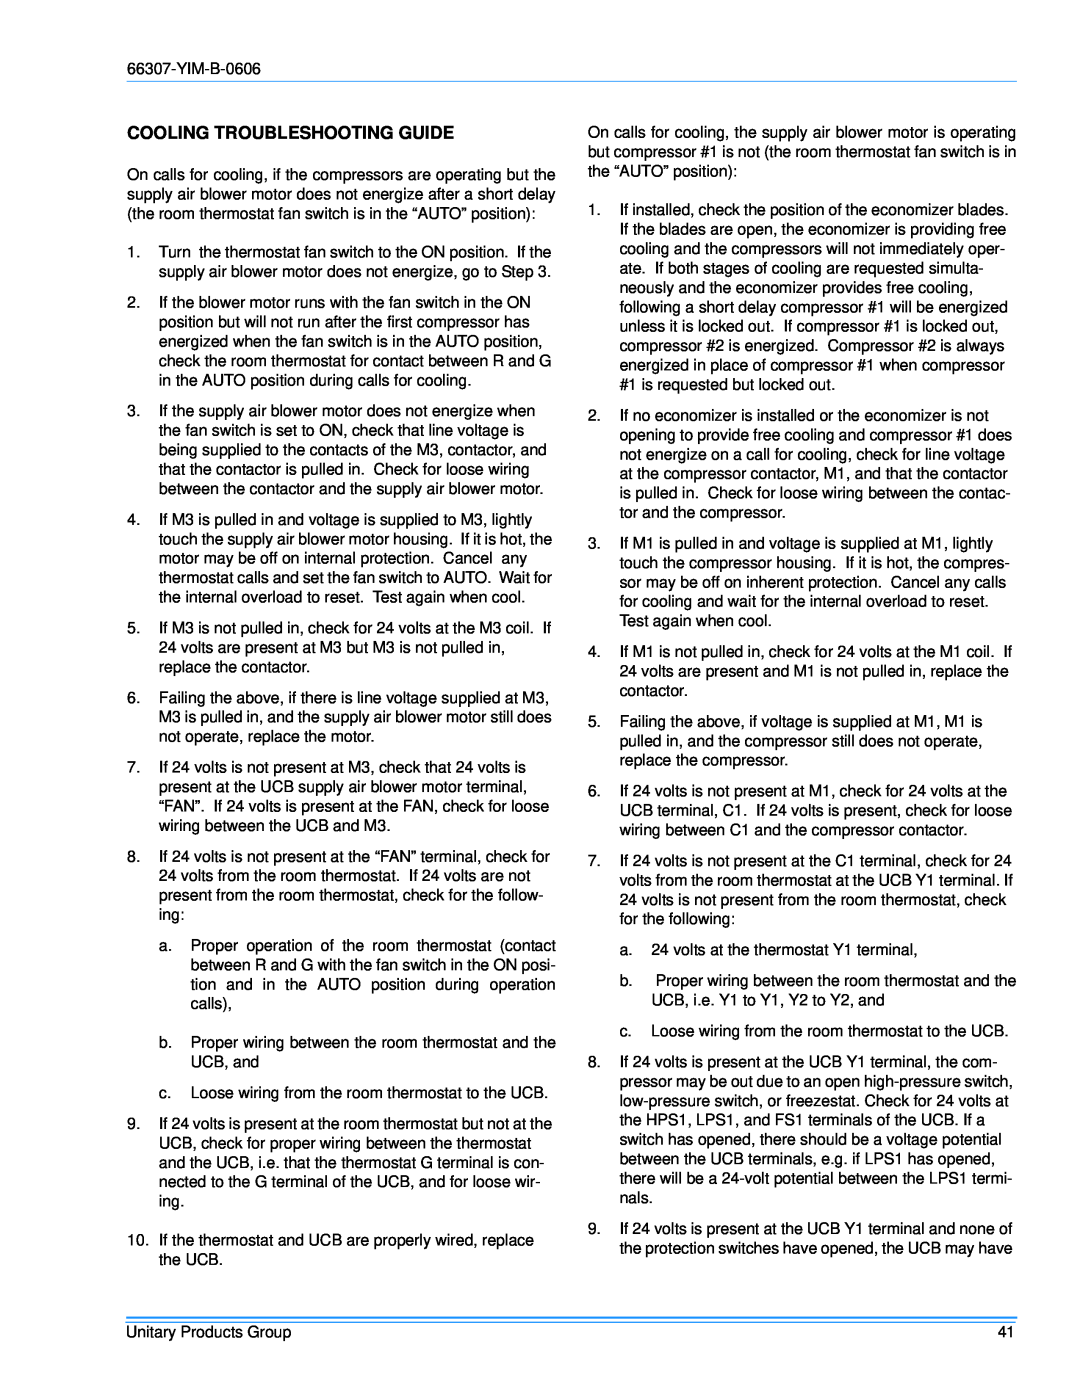 York BP120, BP 090 installation manual Cooling Troubleshooting Guide 